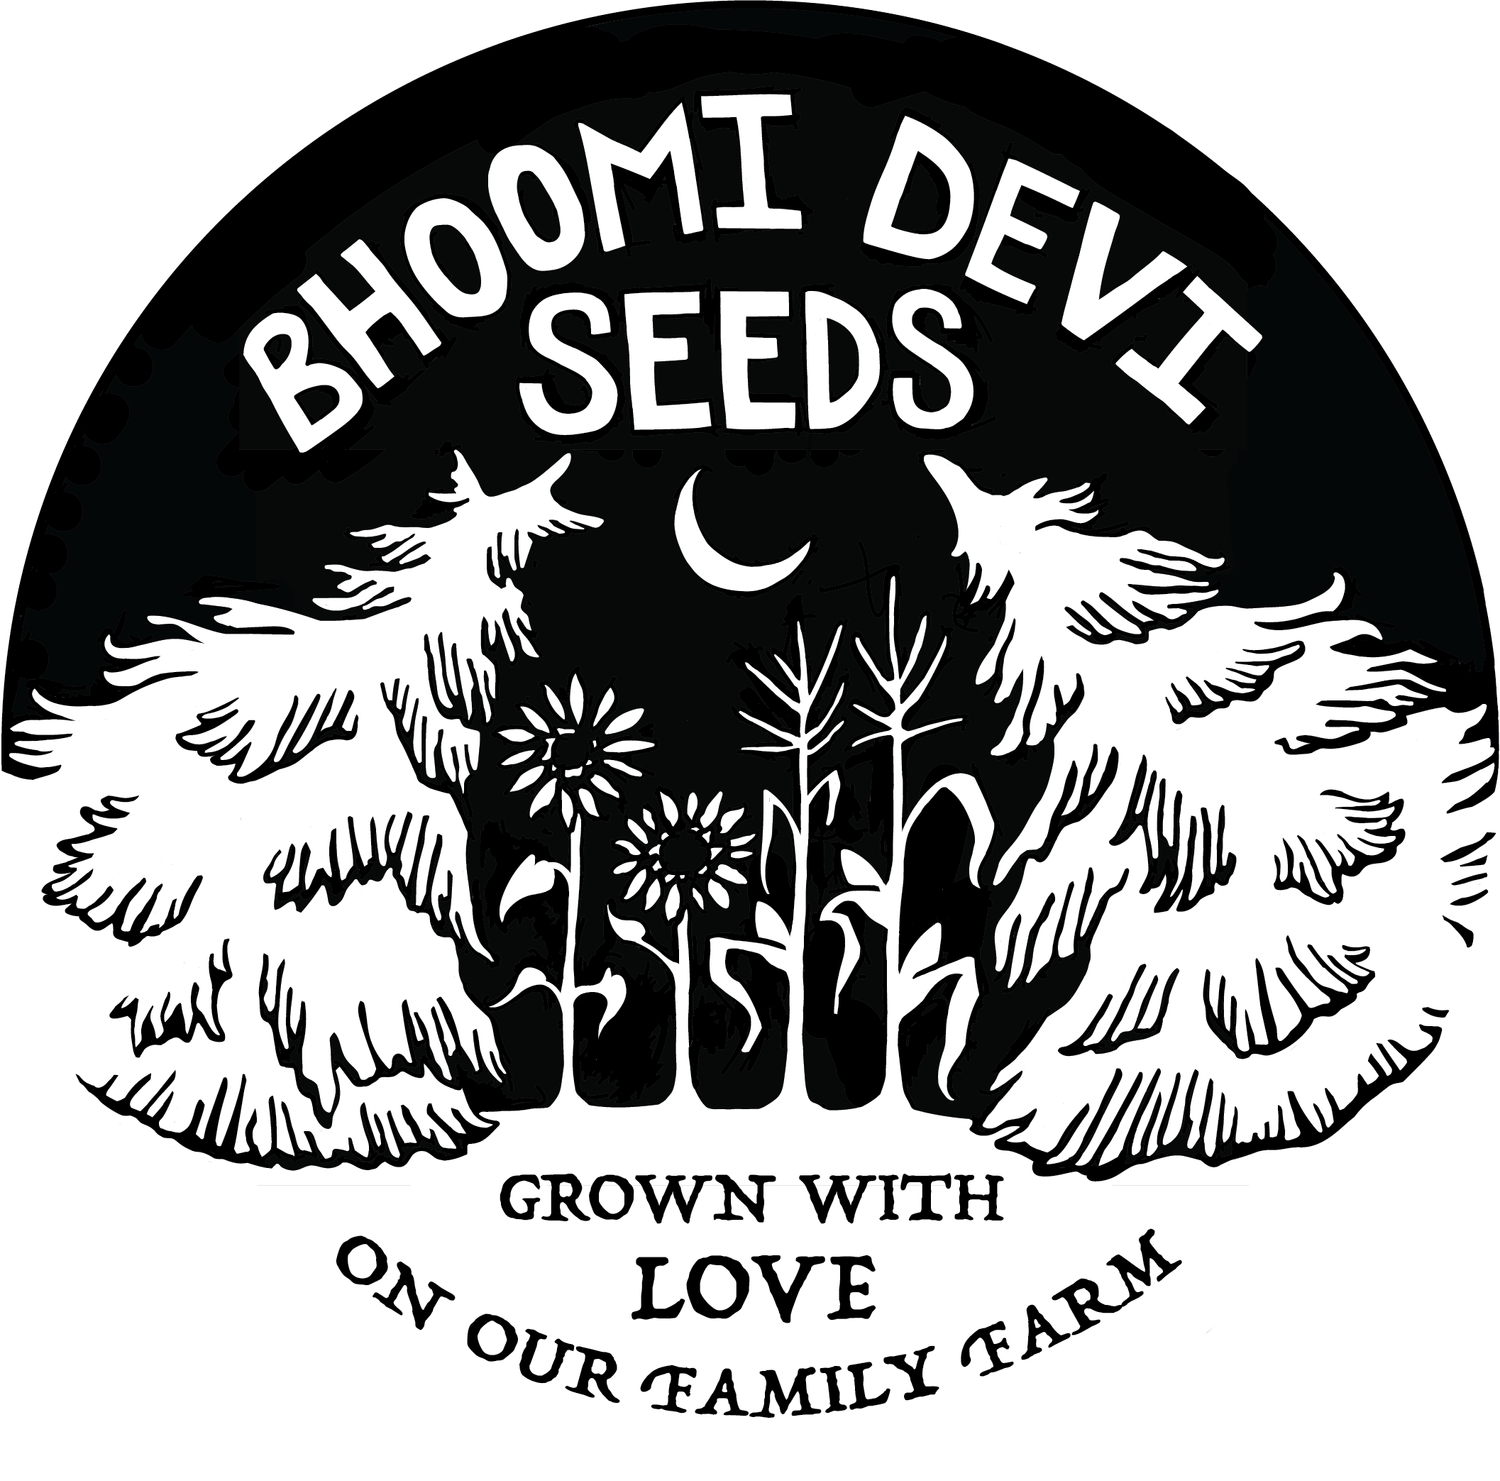 Bhoomi Devi Seeds